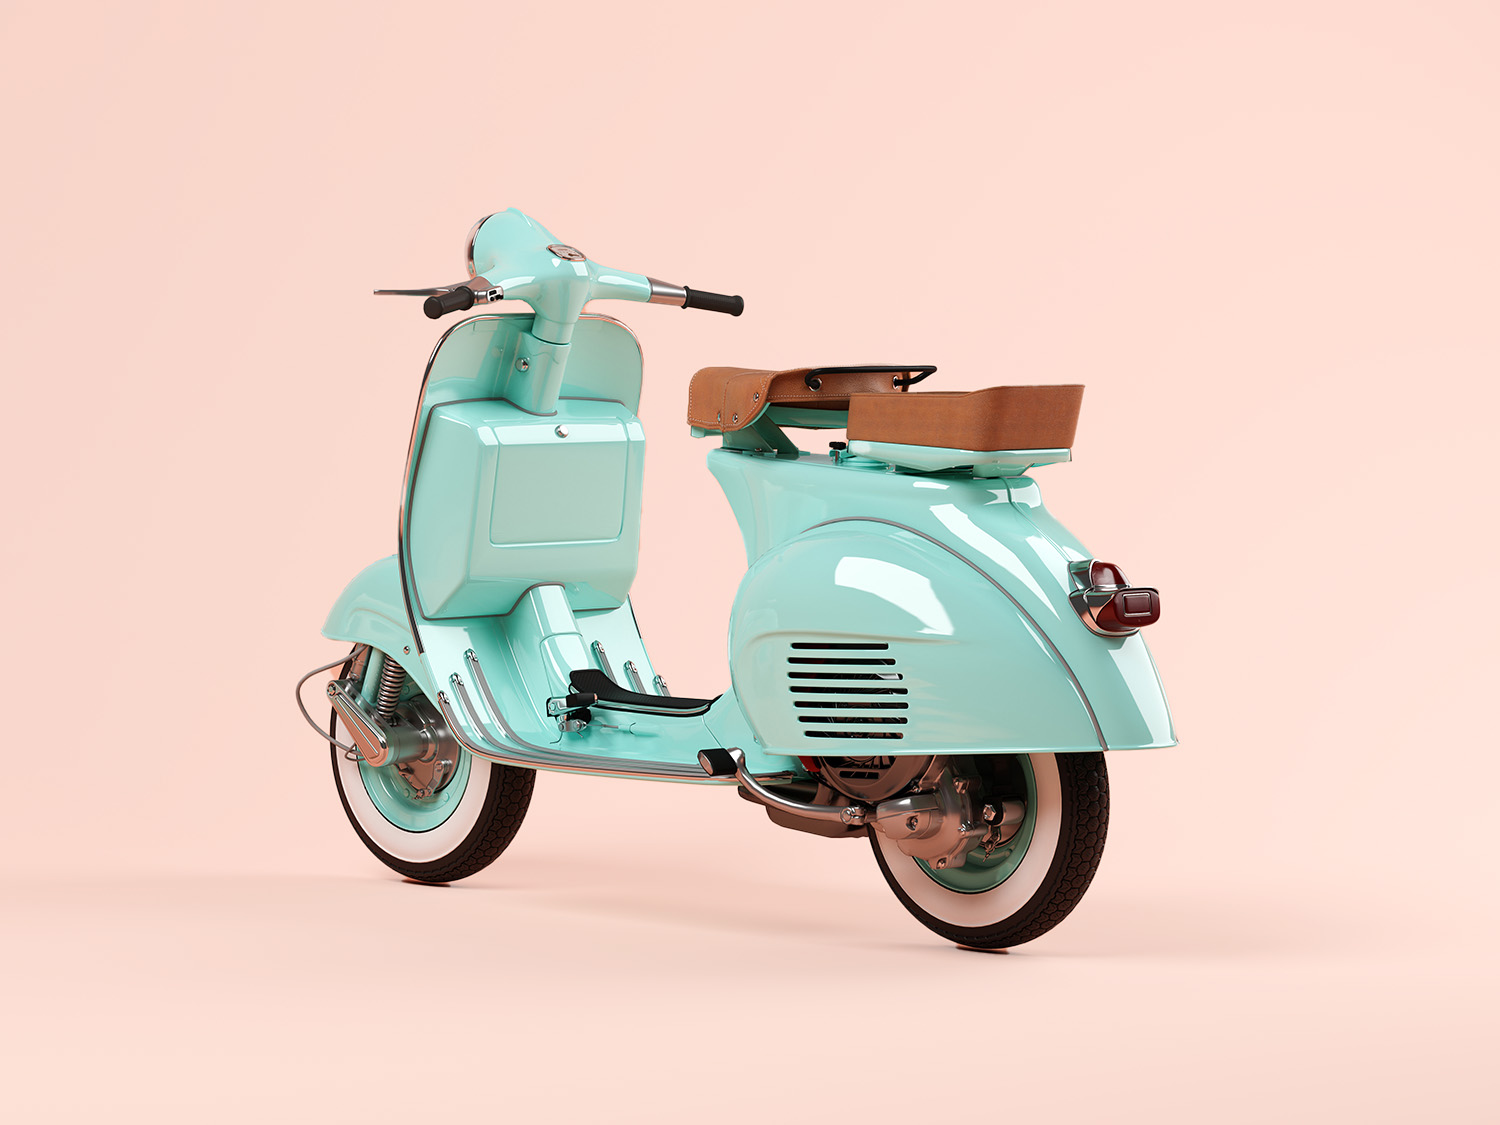 blue-scooter-on-pink-background-3-d-illustration-2021-08-29-03-26-37-utc1